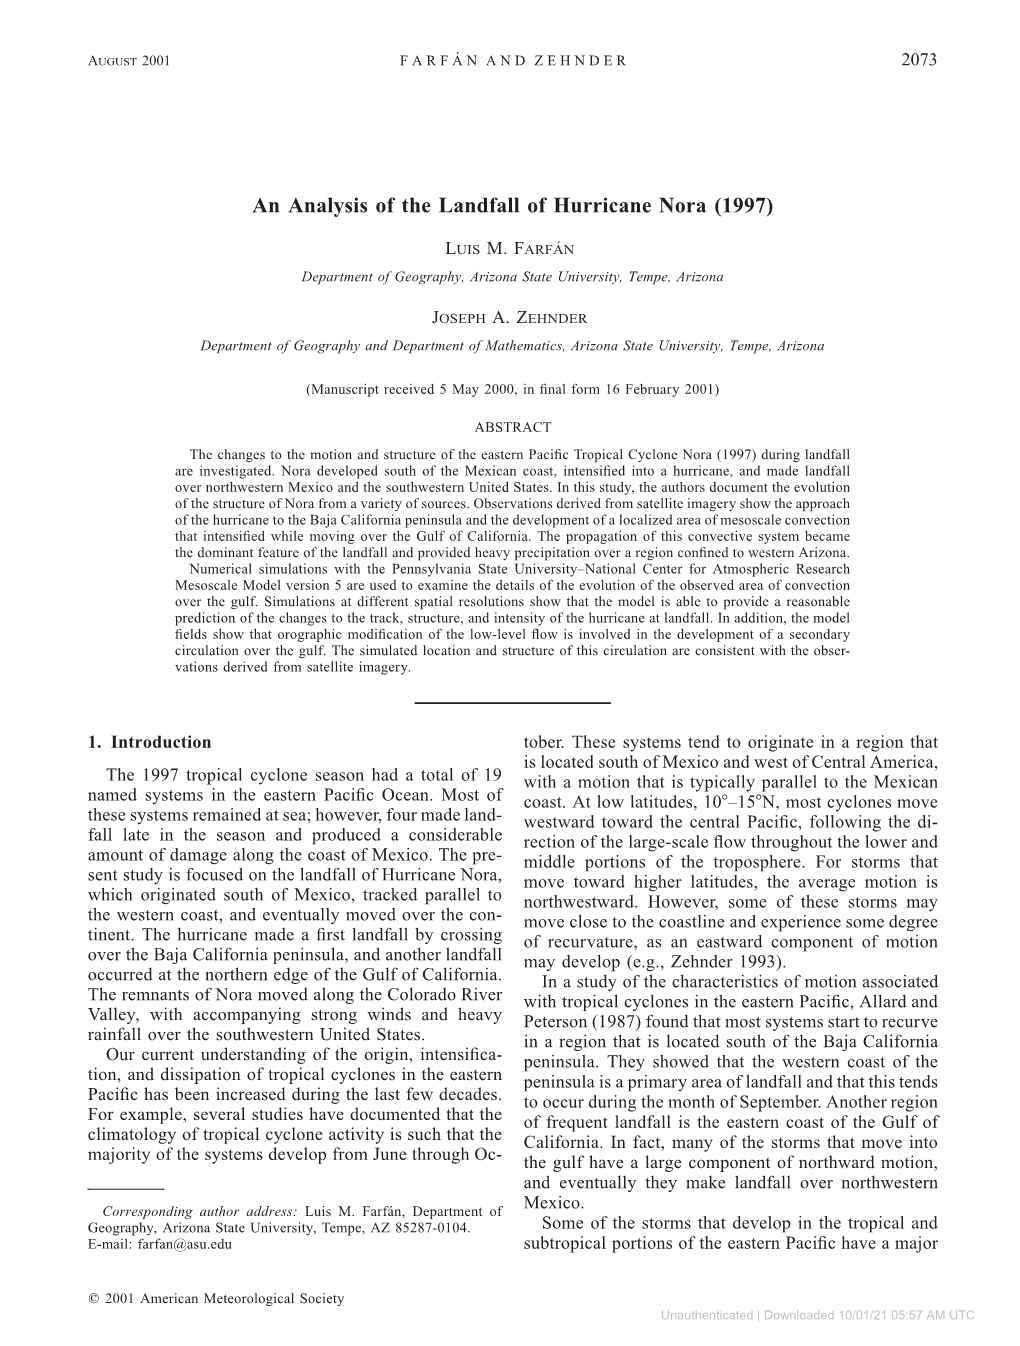 An Analysis of the Landfall of Hurricane Nora (1997)